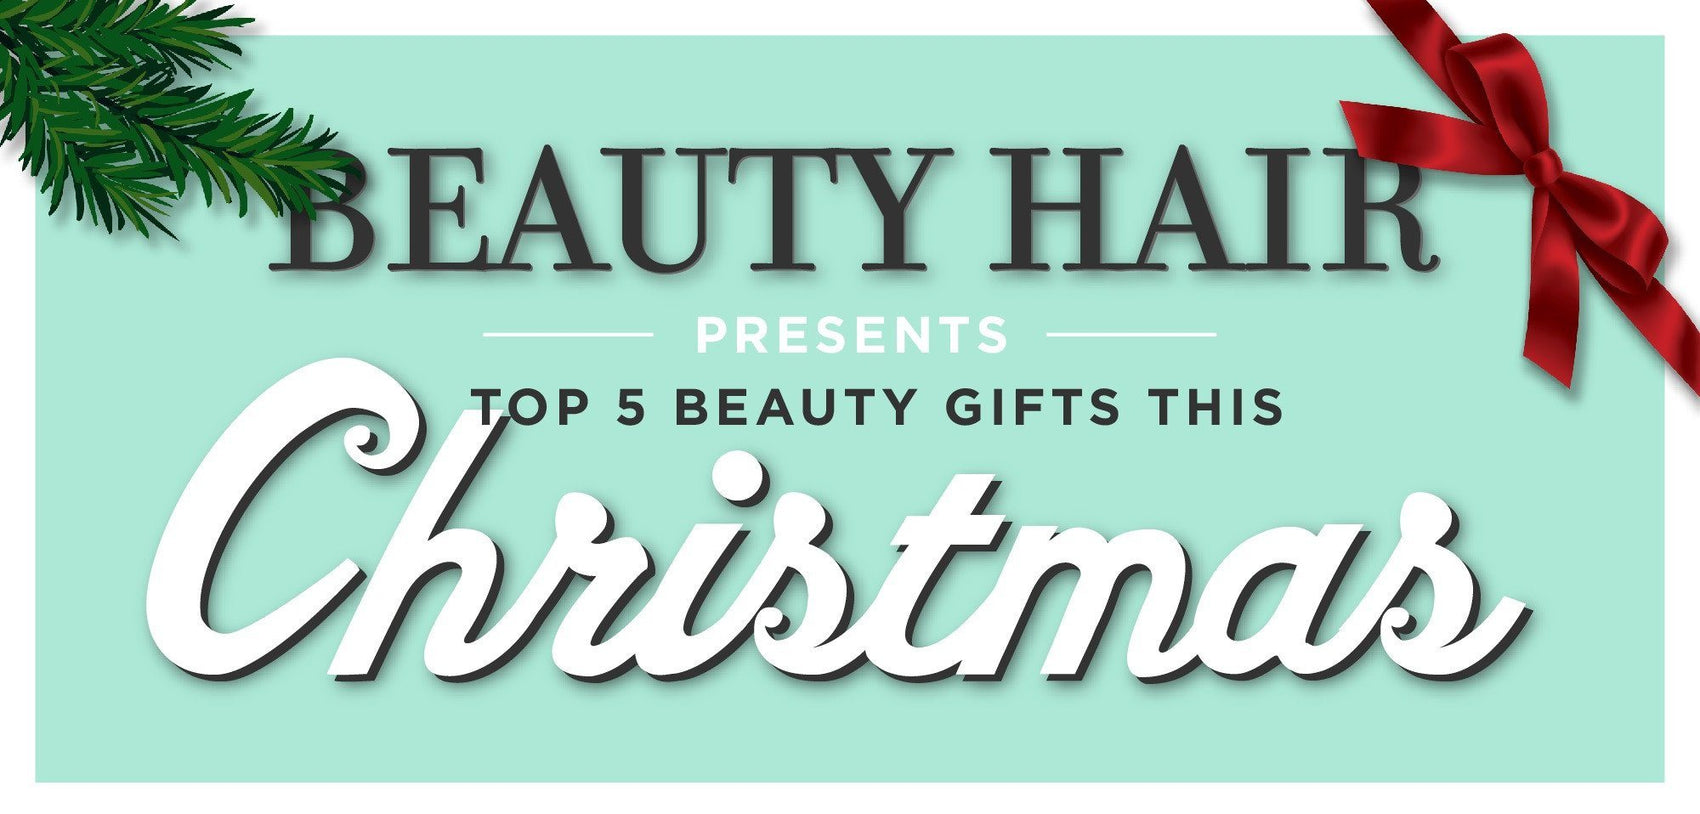 Top 5 Beauty Gifts for Christmas - beautyhair.co.uk